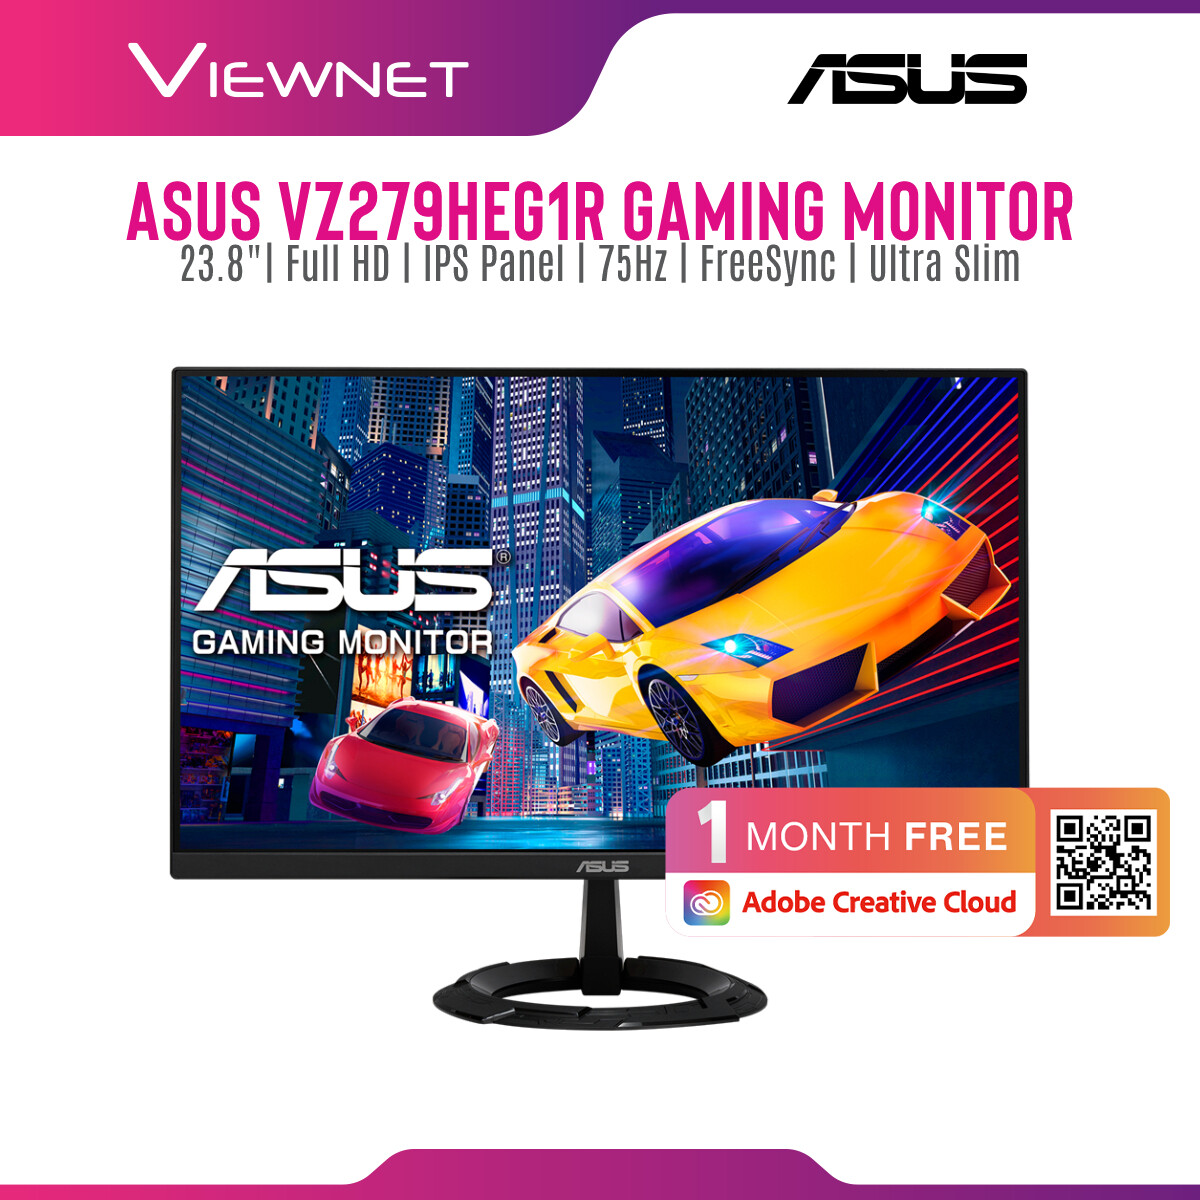 ASUS VZ279HEG1R Gaming Monitor â€“ 27 inch Full HD (1920 x 1080), IPS, 75Hz, 1ms MPRT, Extreme Low Motion Blurâ„¢, FreeSyncâ„¢, Ultra-slim